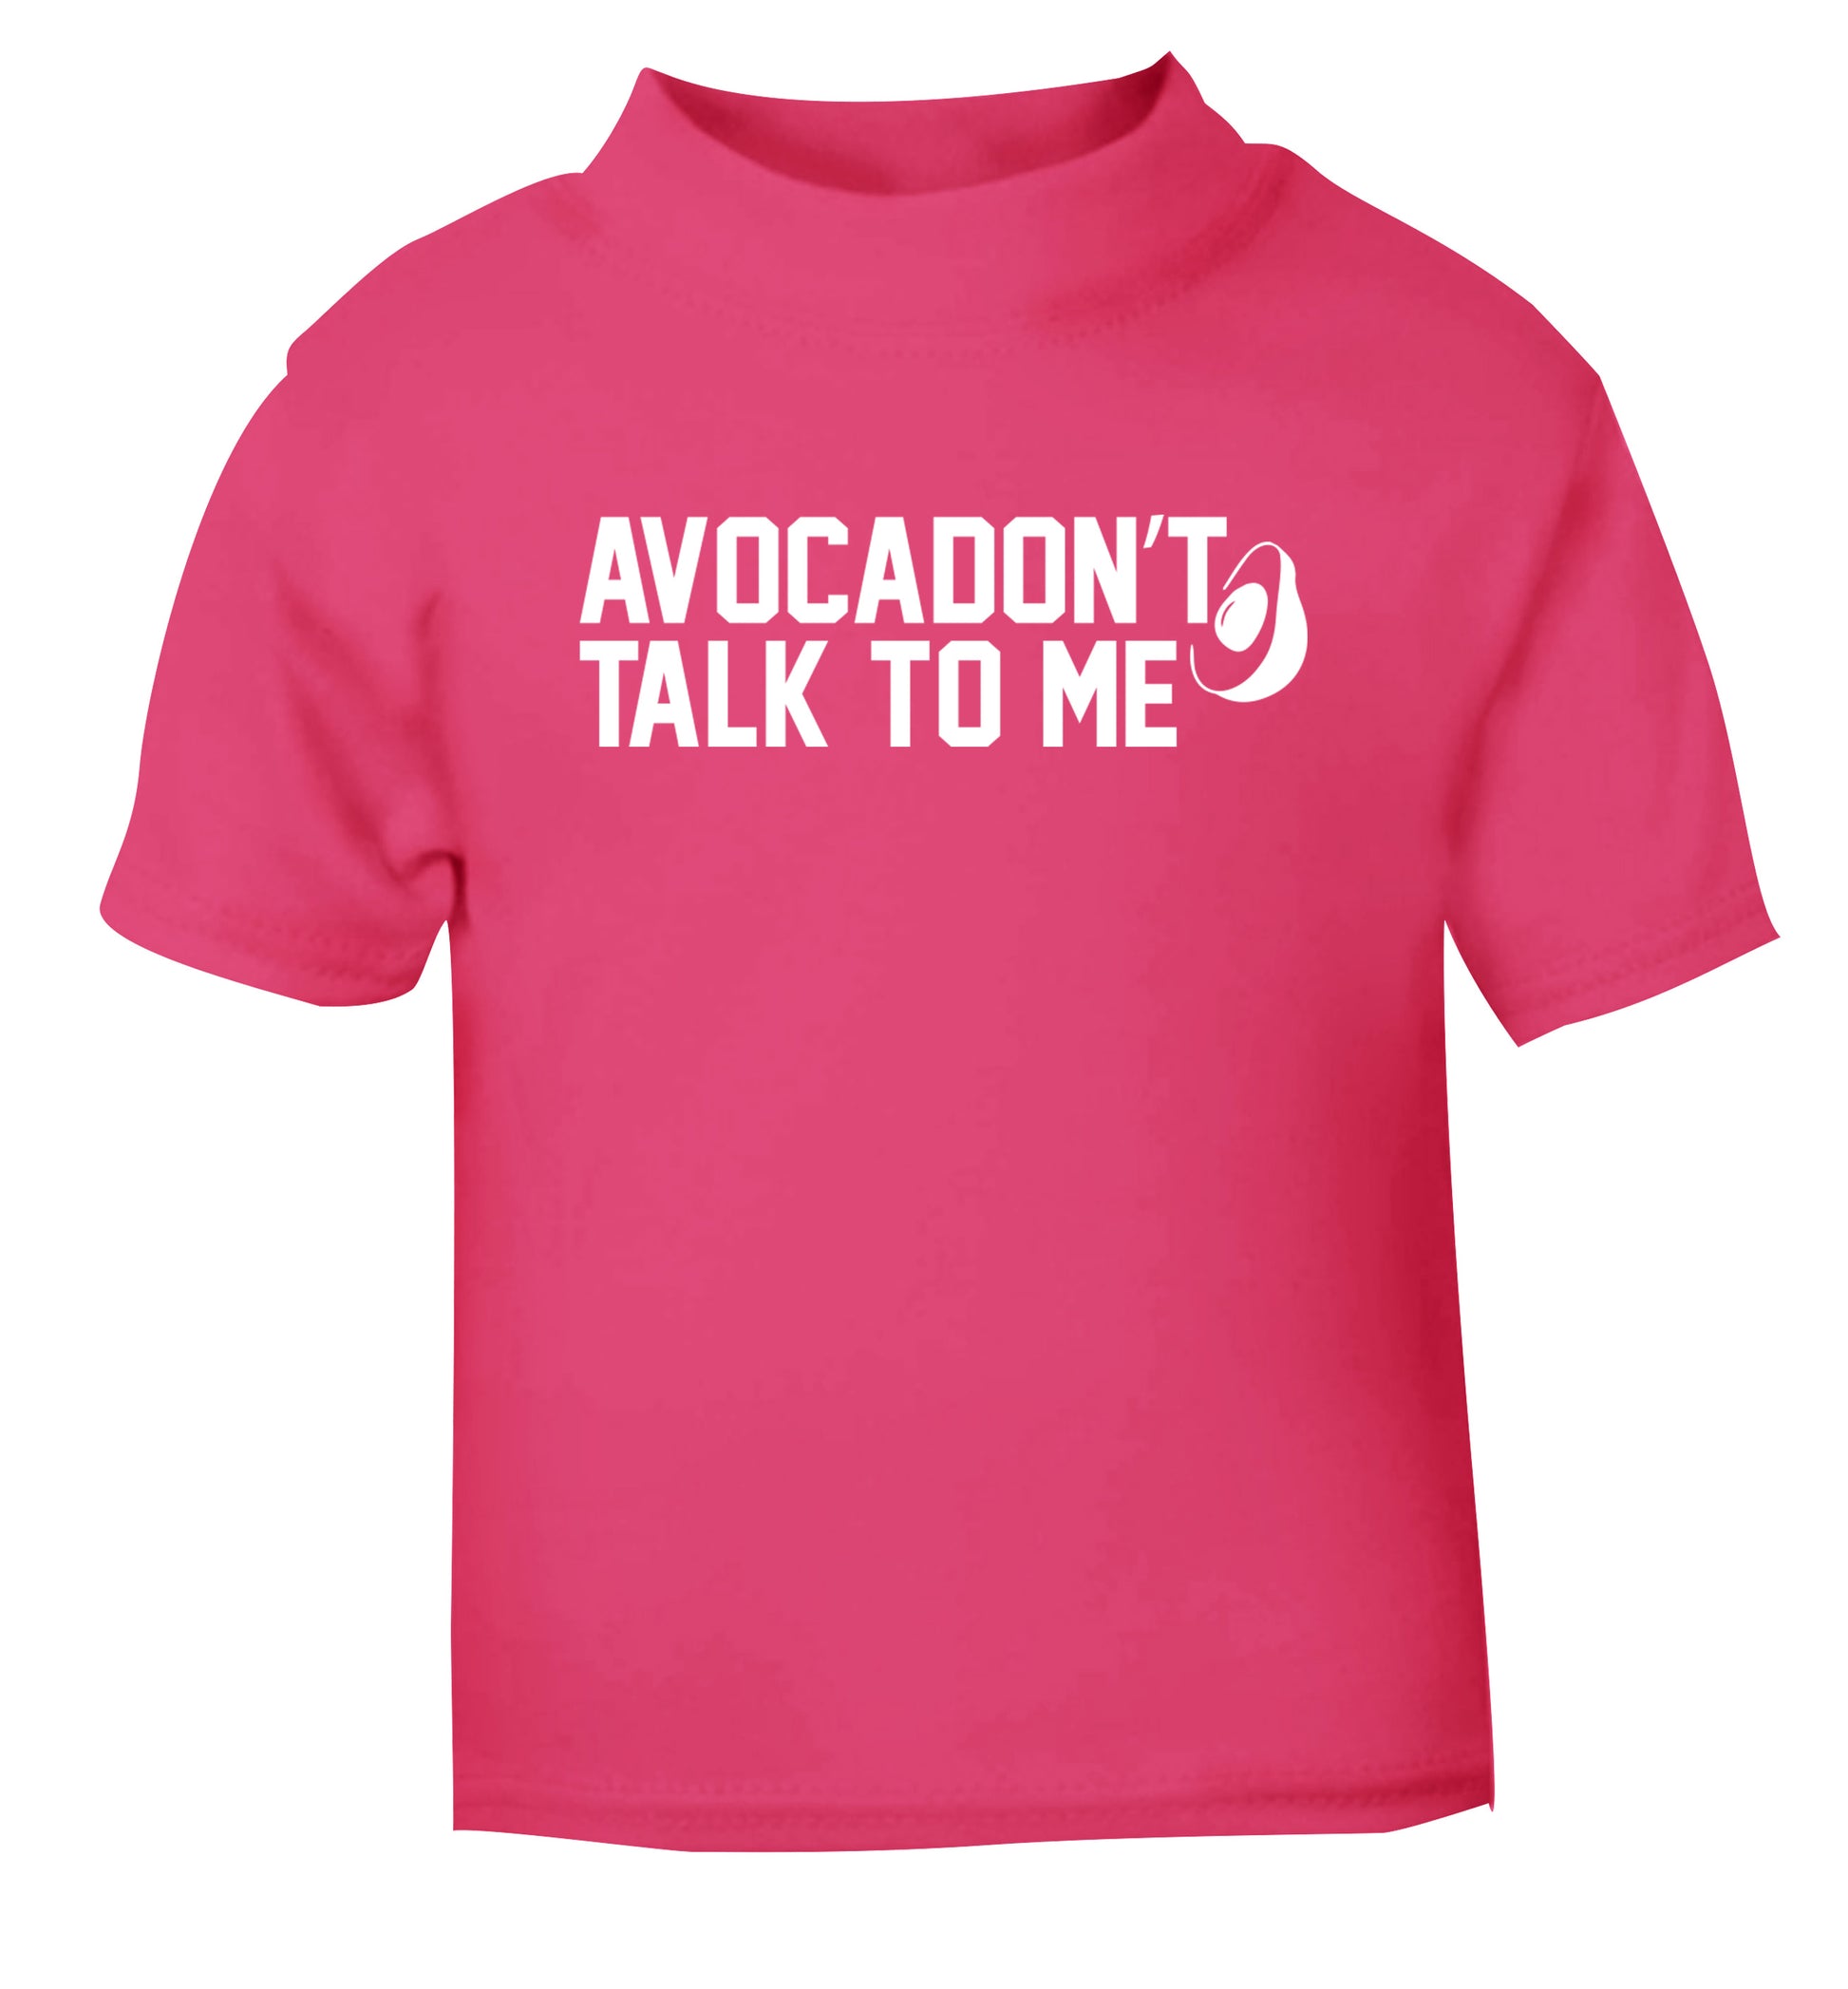 Avocadon't talk to me pink Baby Toddler Tshirt 2 Years